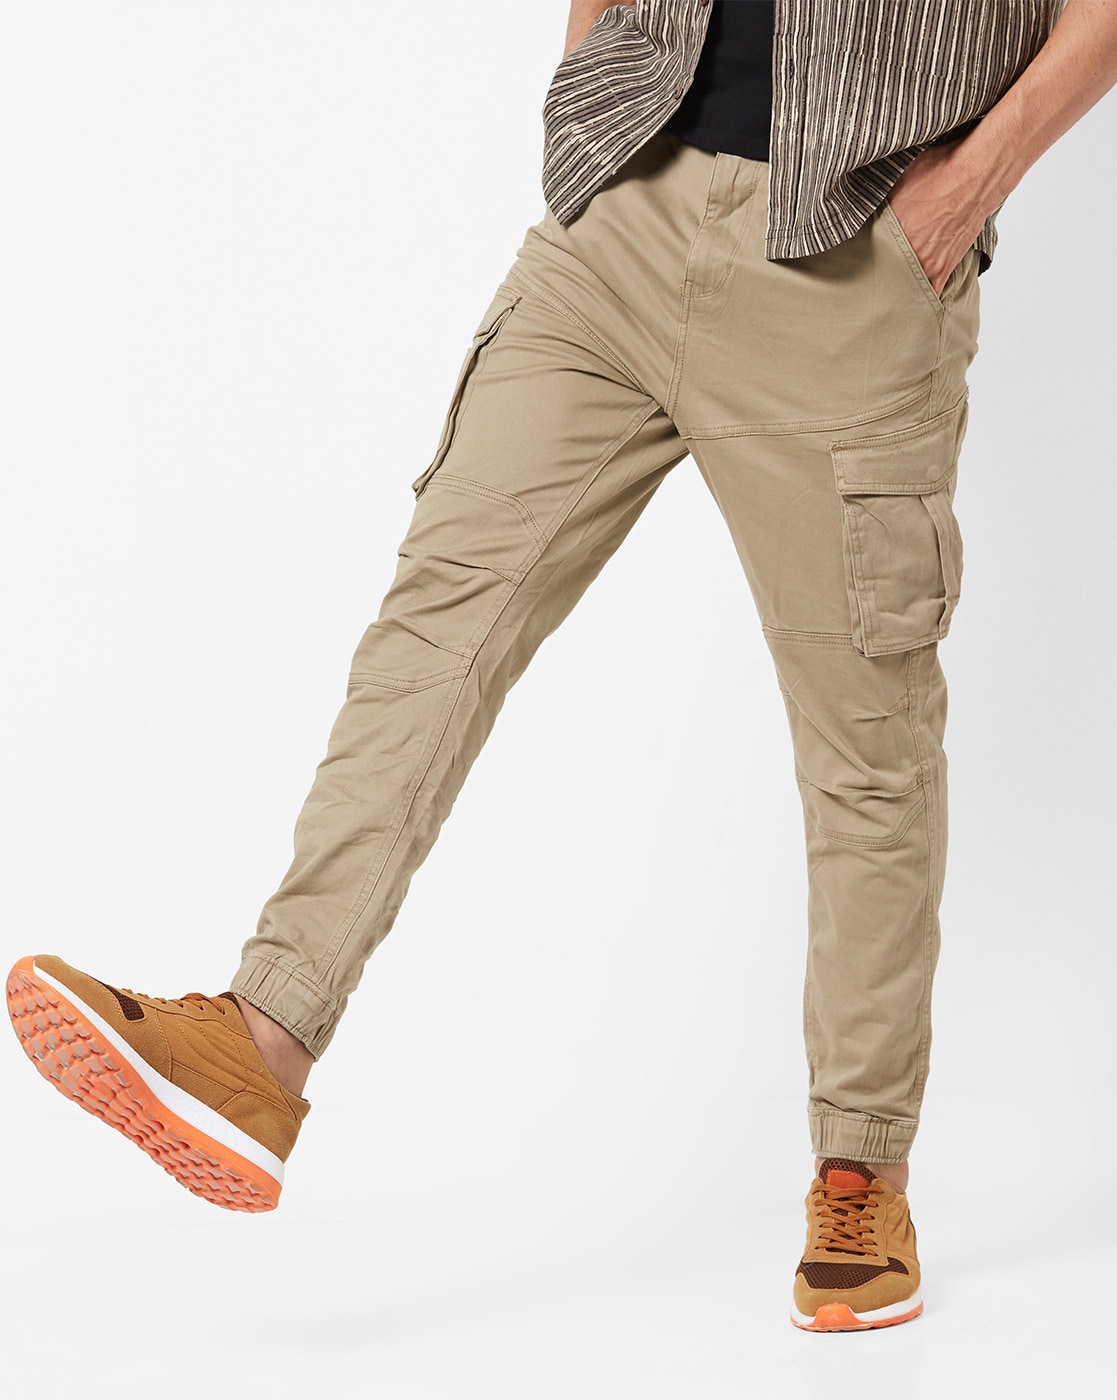 Buy Beige Trousers  Pants for Boys by GAS Online  Ajiocom